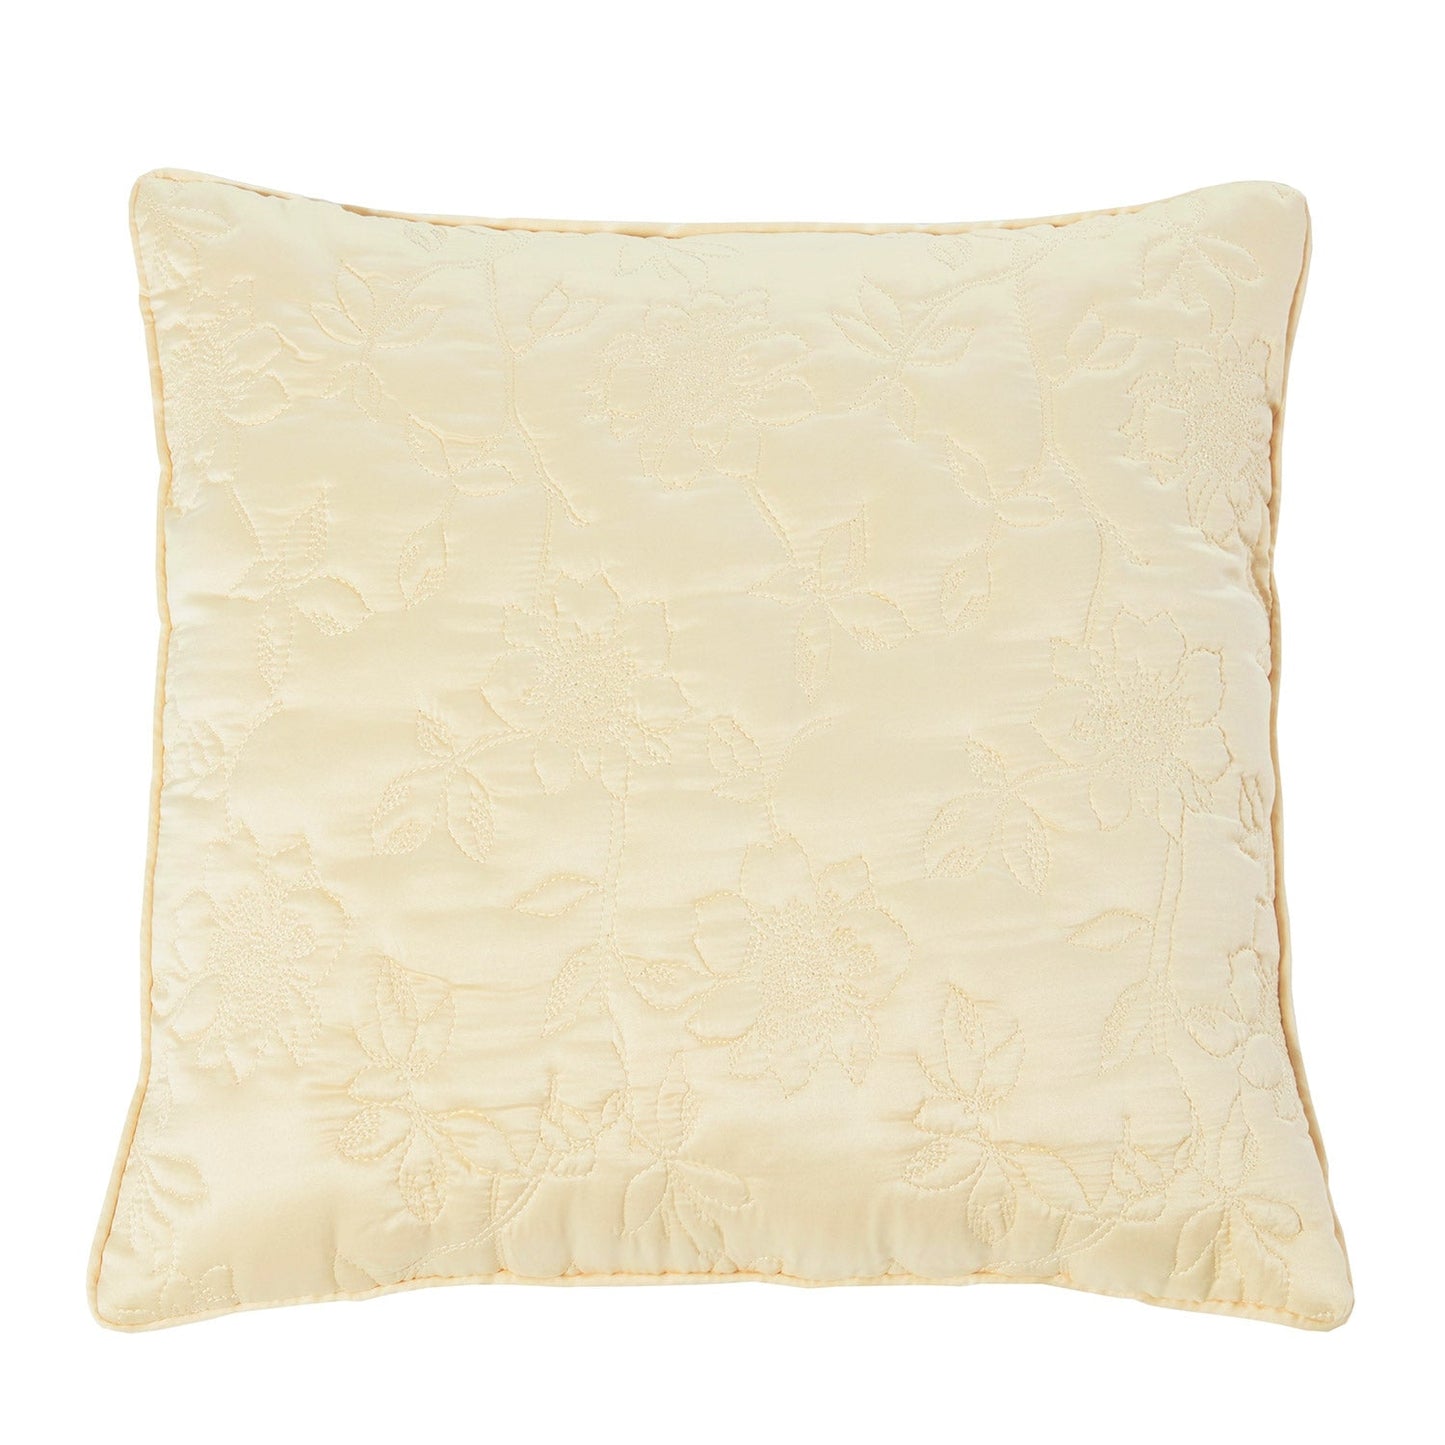 Lottie Lemon Luxury Quilted Filled Square Cushion (45cm x 45cm)